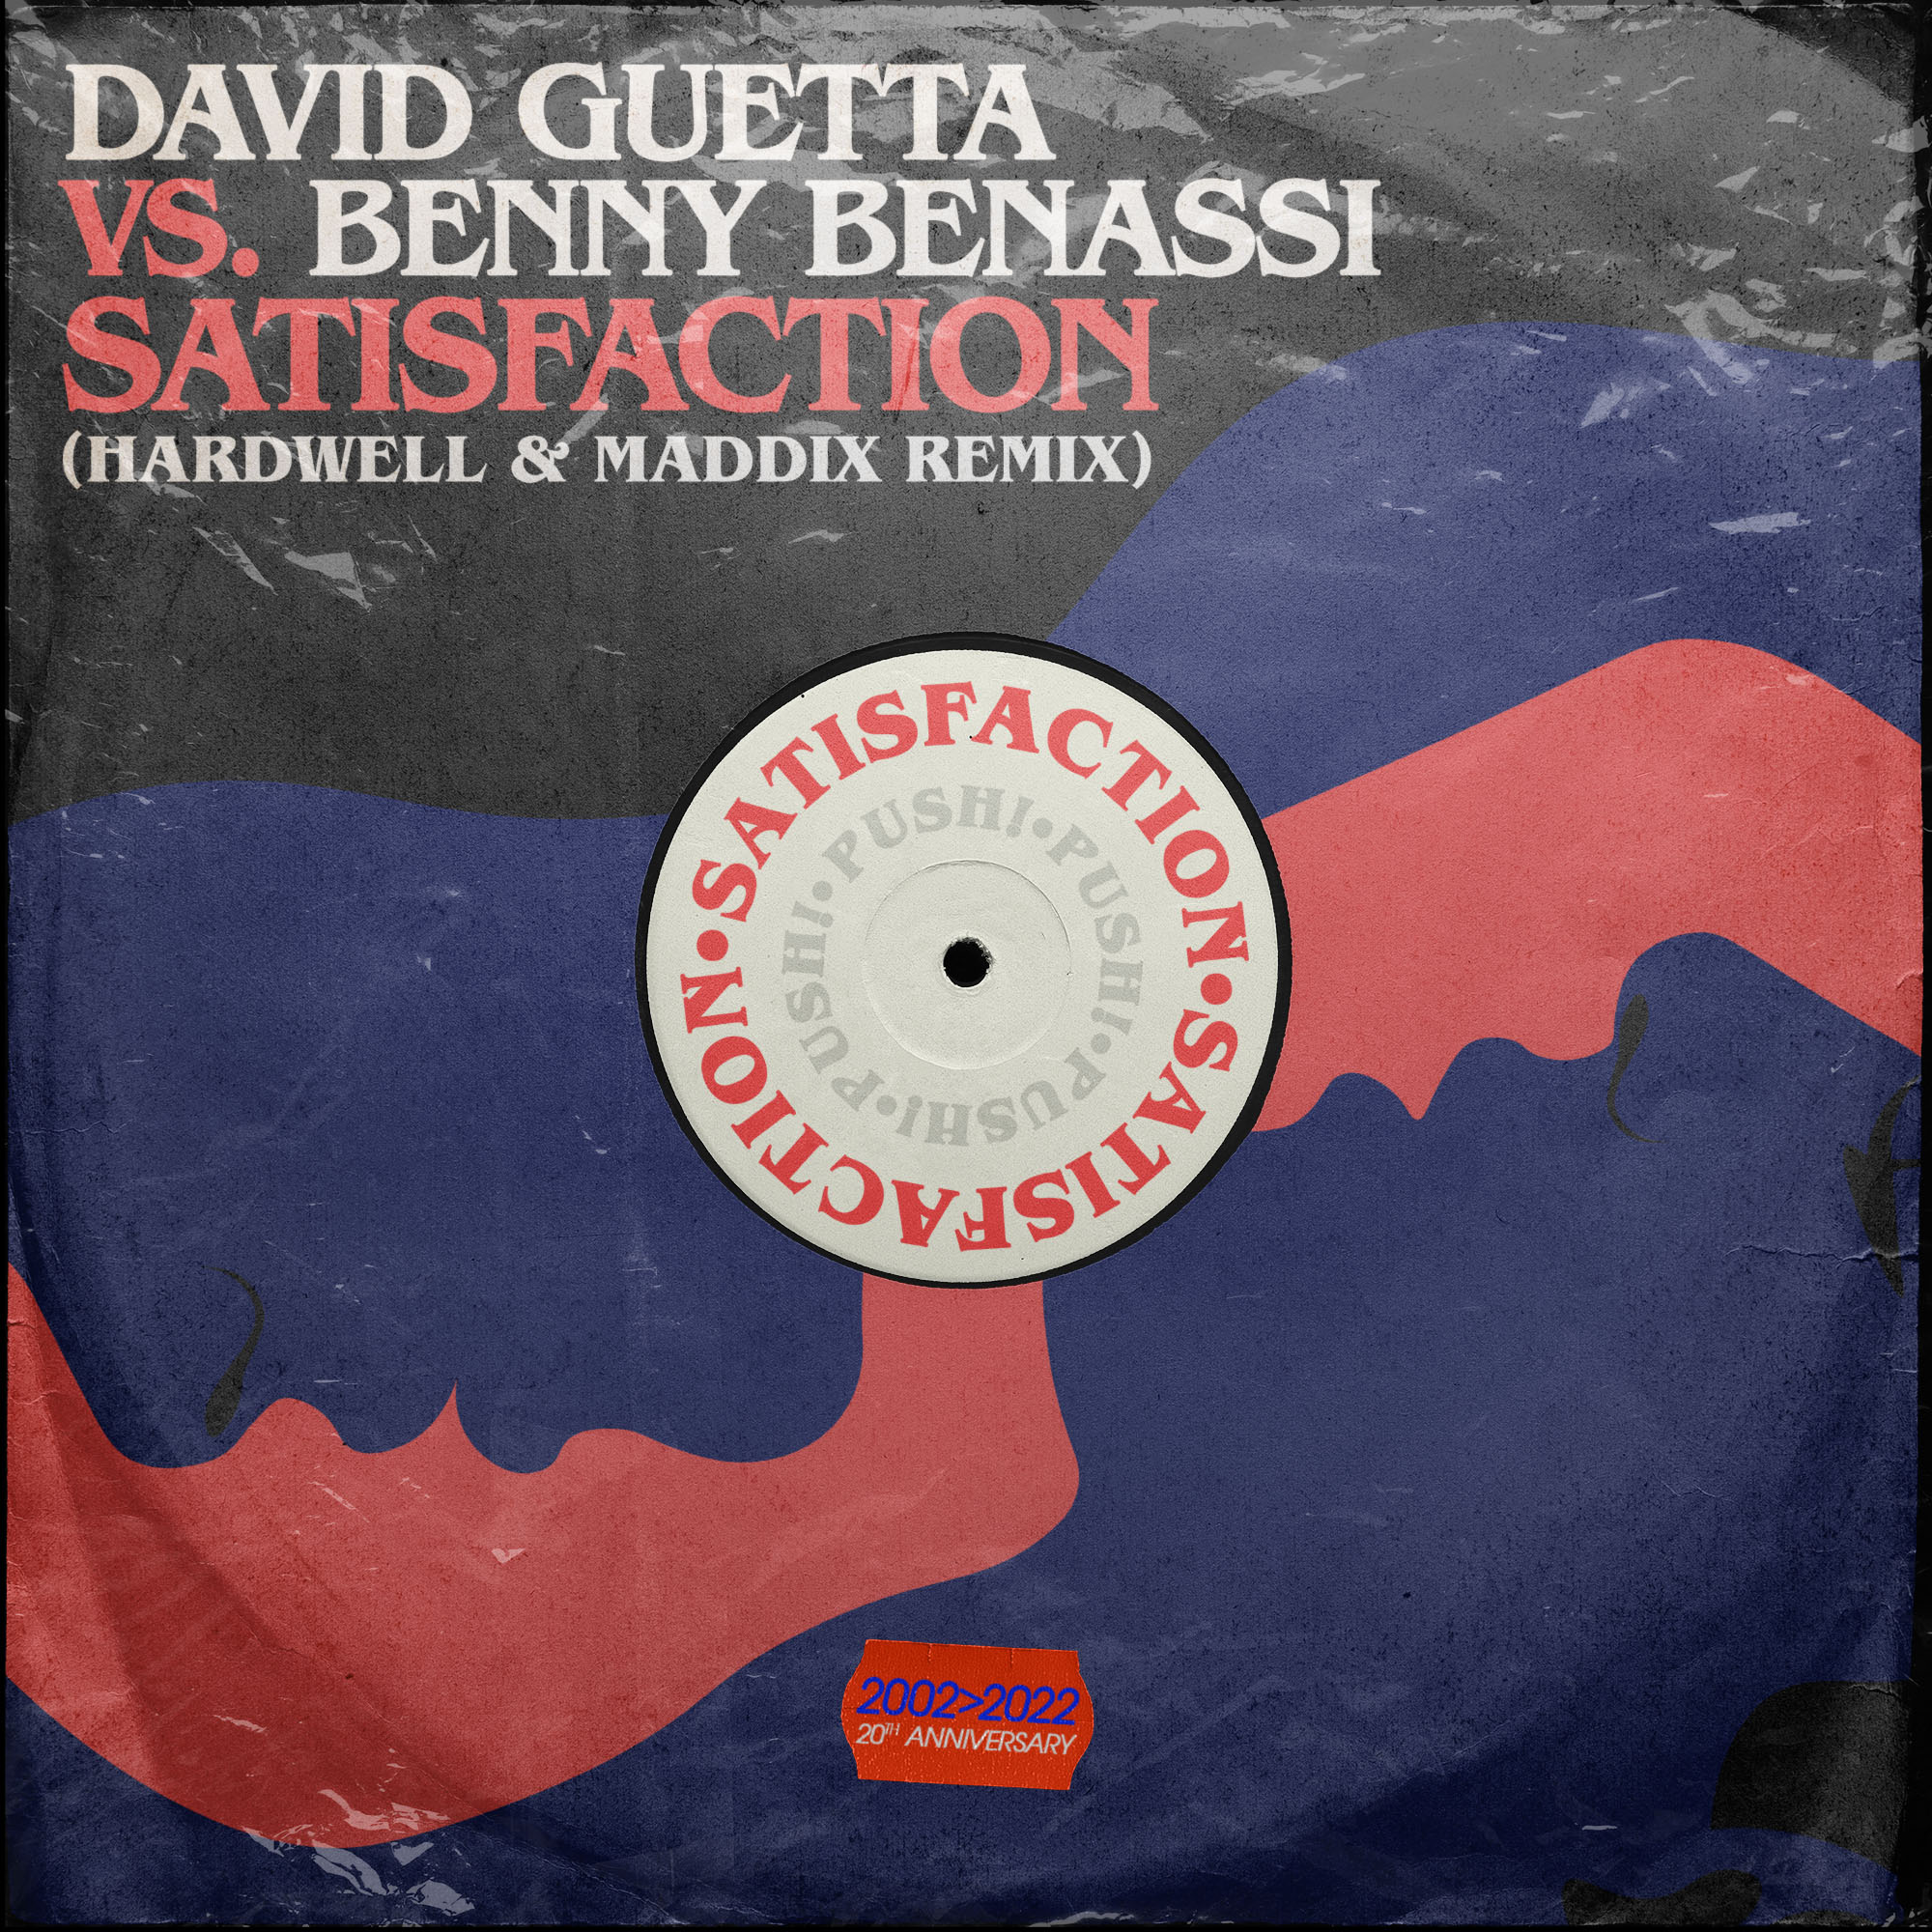 Satisfaction ремикс. David Guetta vs. Benny Benassi - satisfaction 2022 (Extended Mix). David Guetta Benny Benassi. Benny Benassi satisfaction 2022. David Guetta 2022.